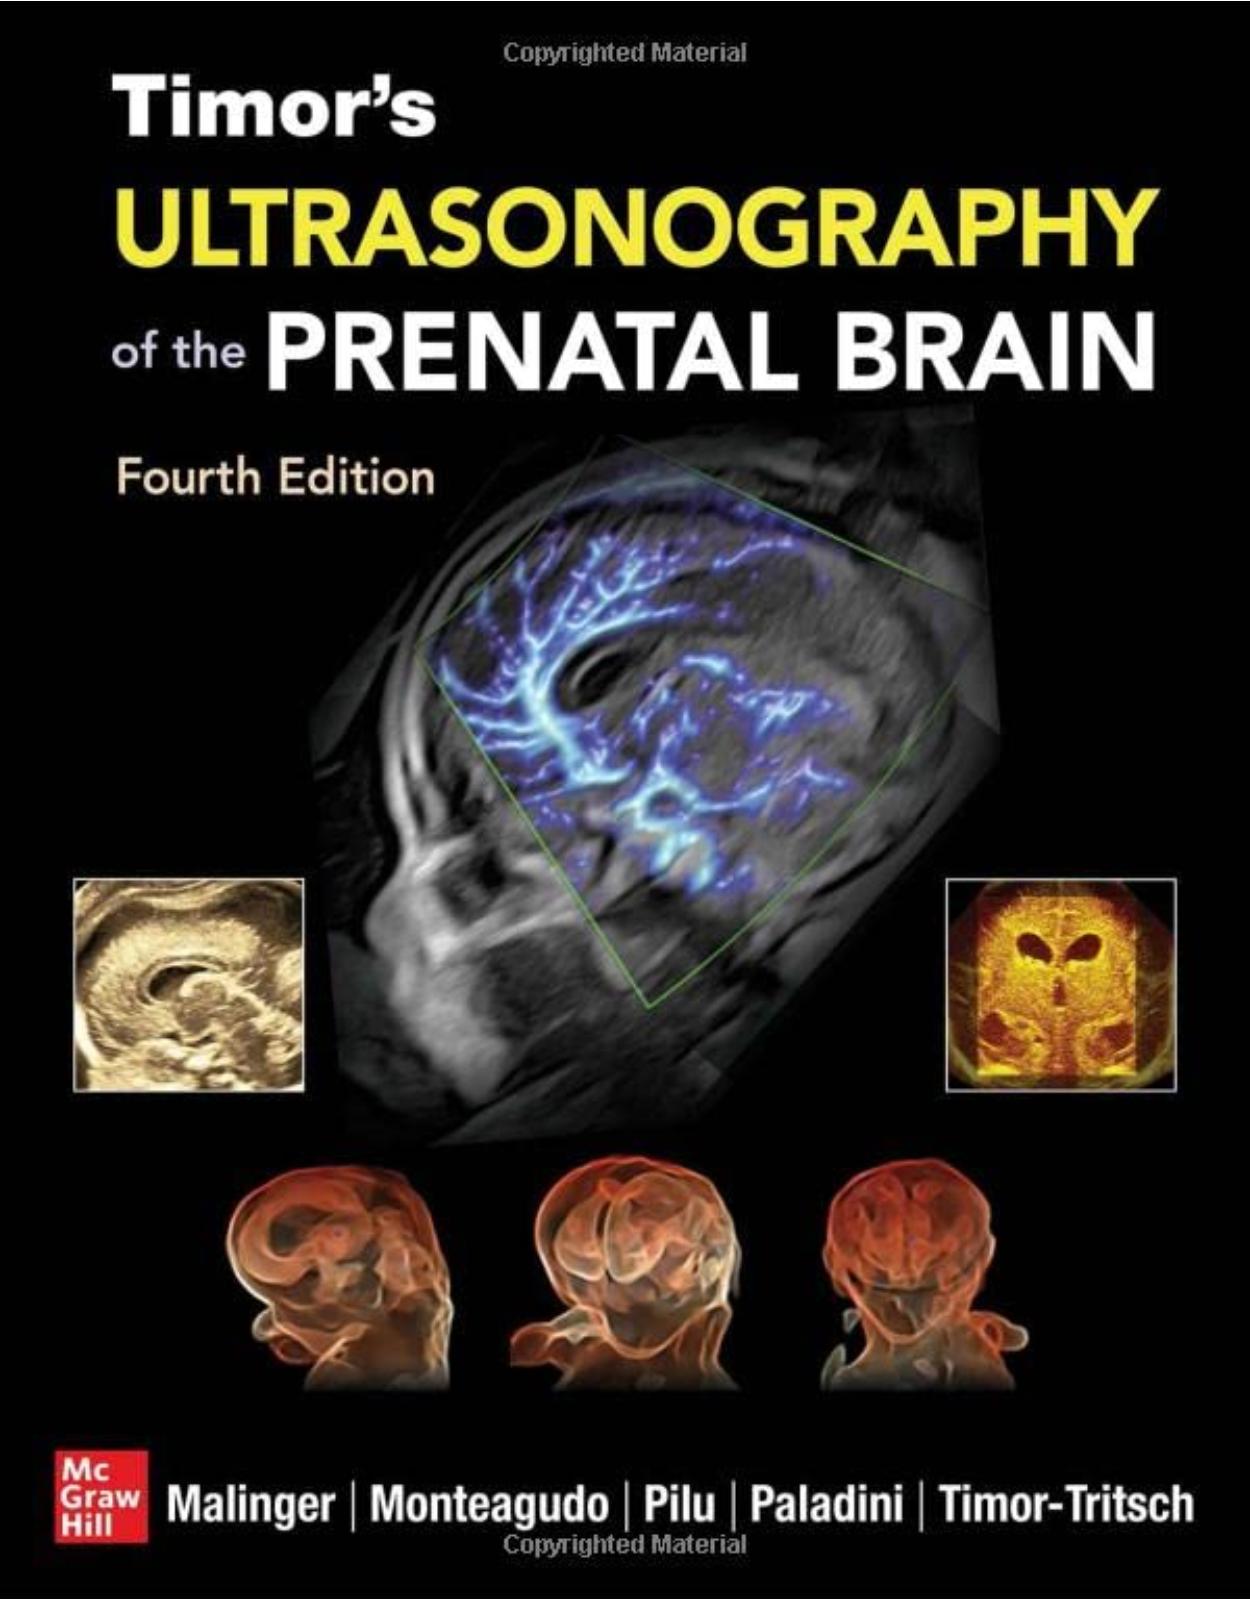 Timor’s Ultrasonography of the Prenatal Brain, Fourth Edition